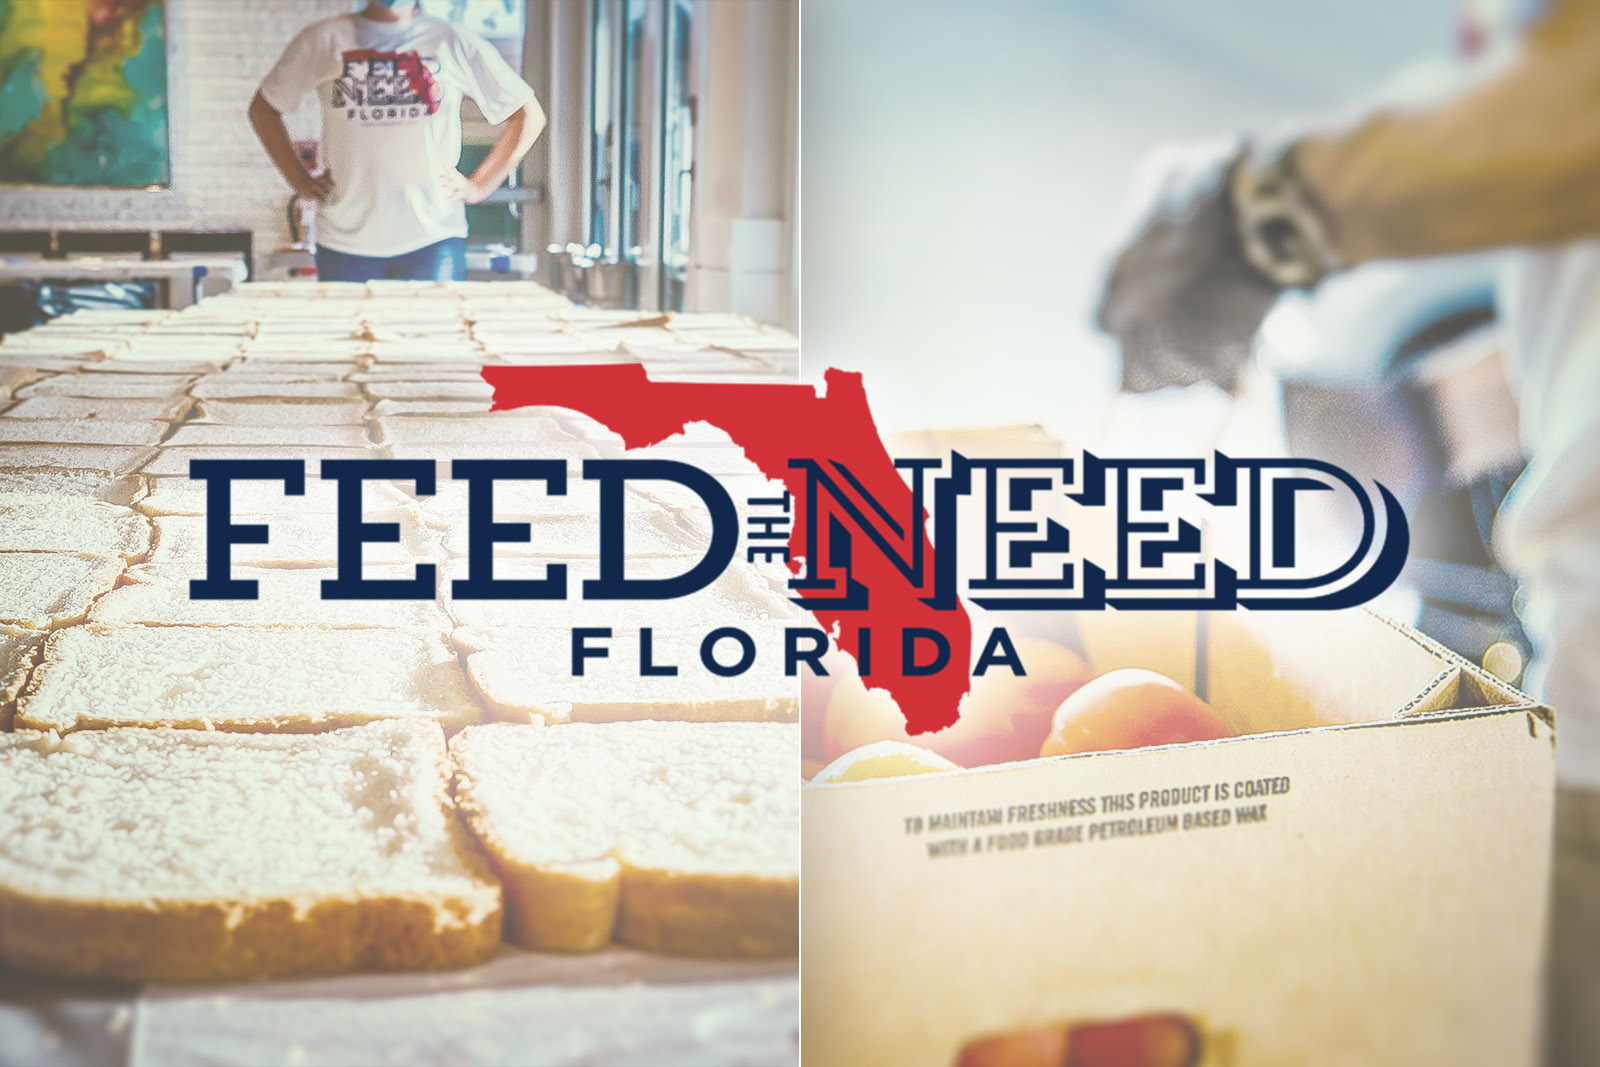 Feed the Need Florida